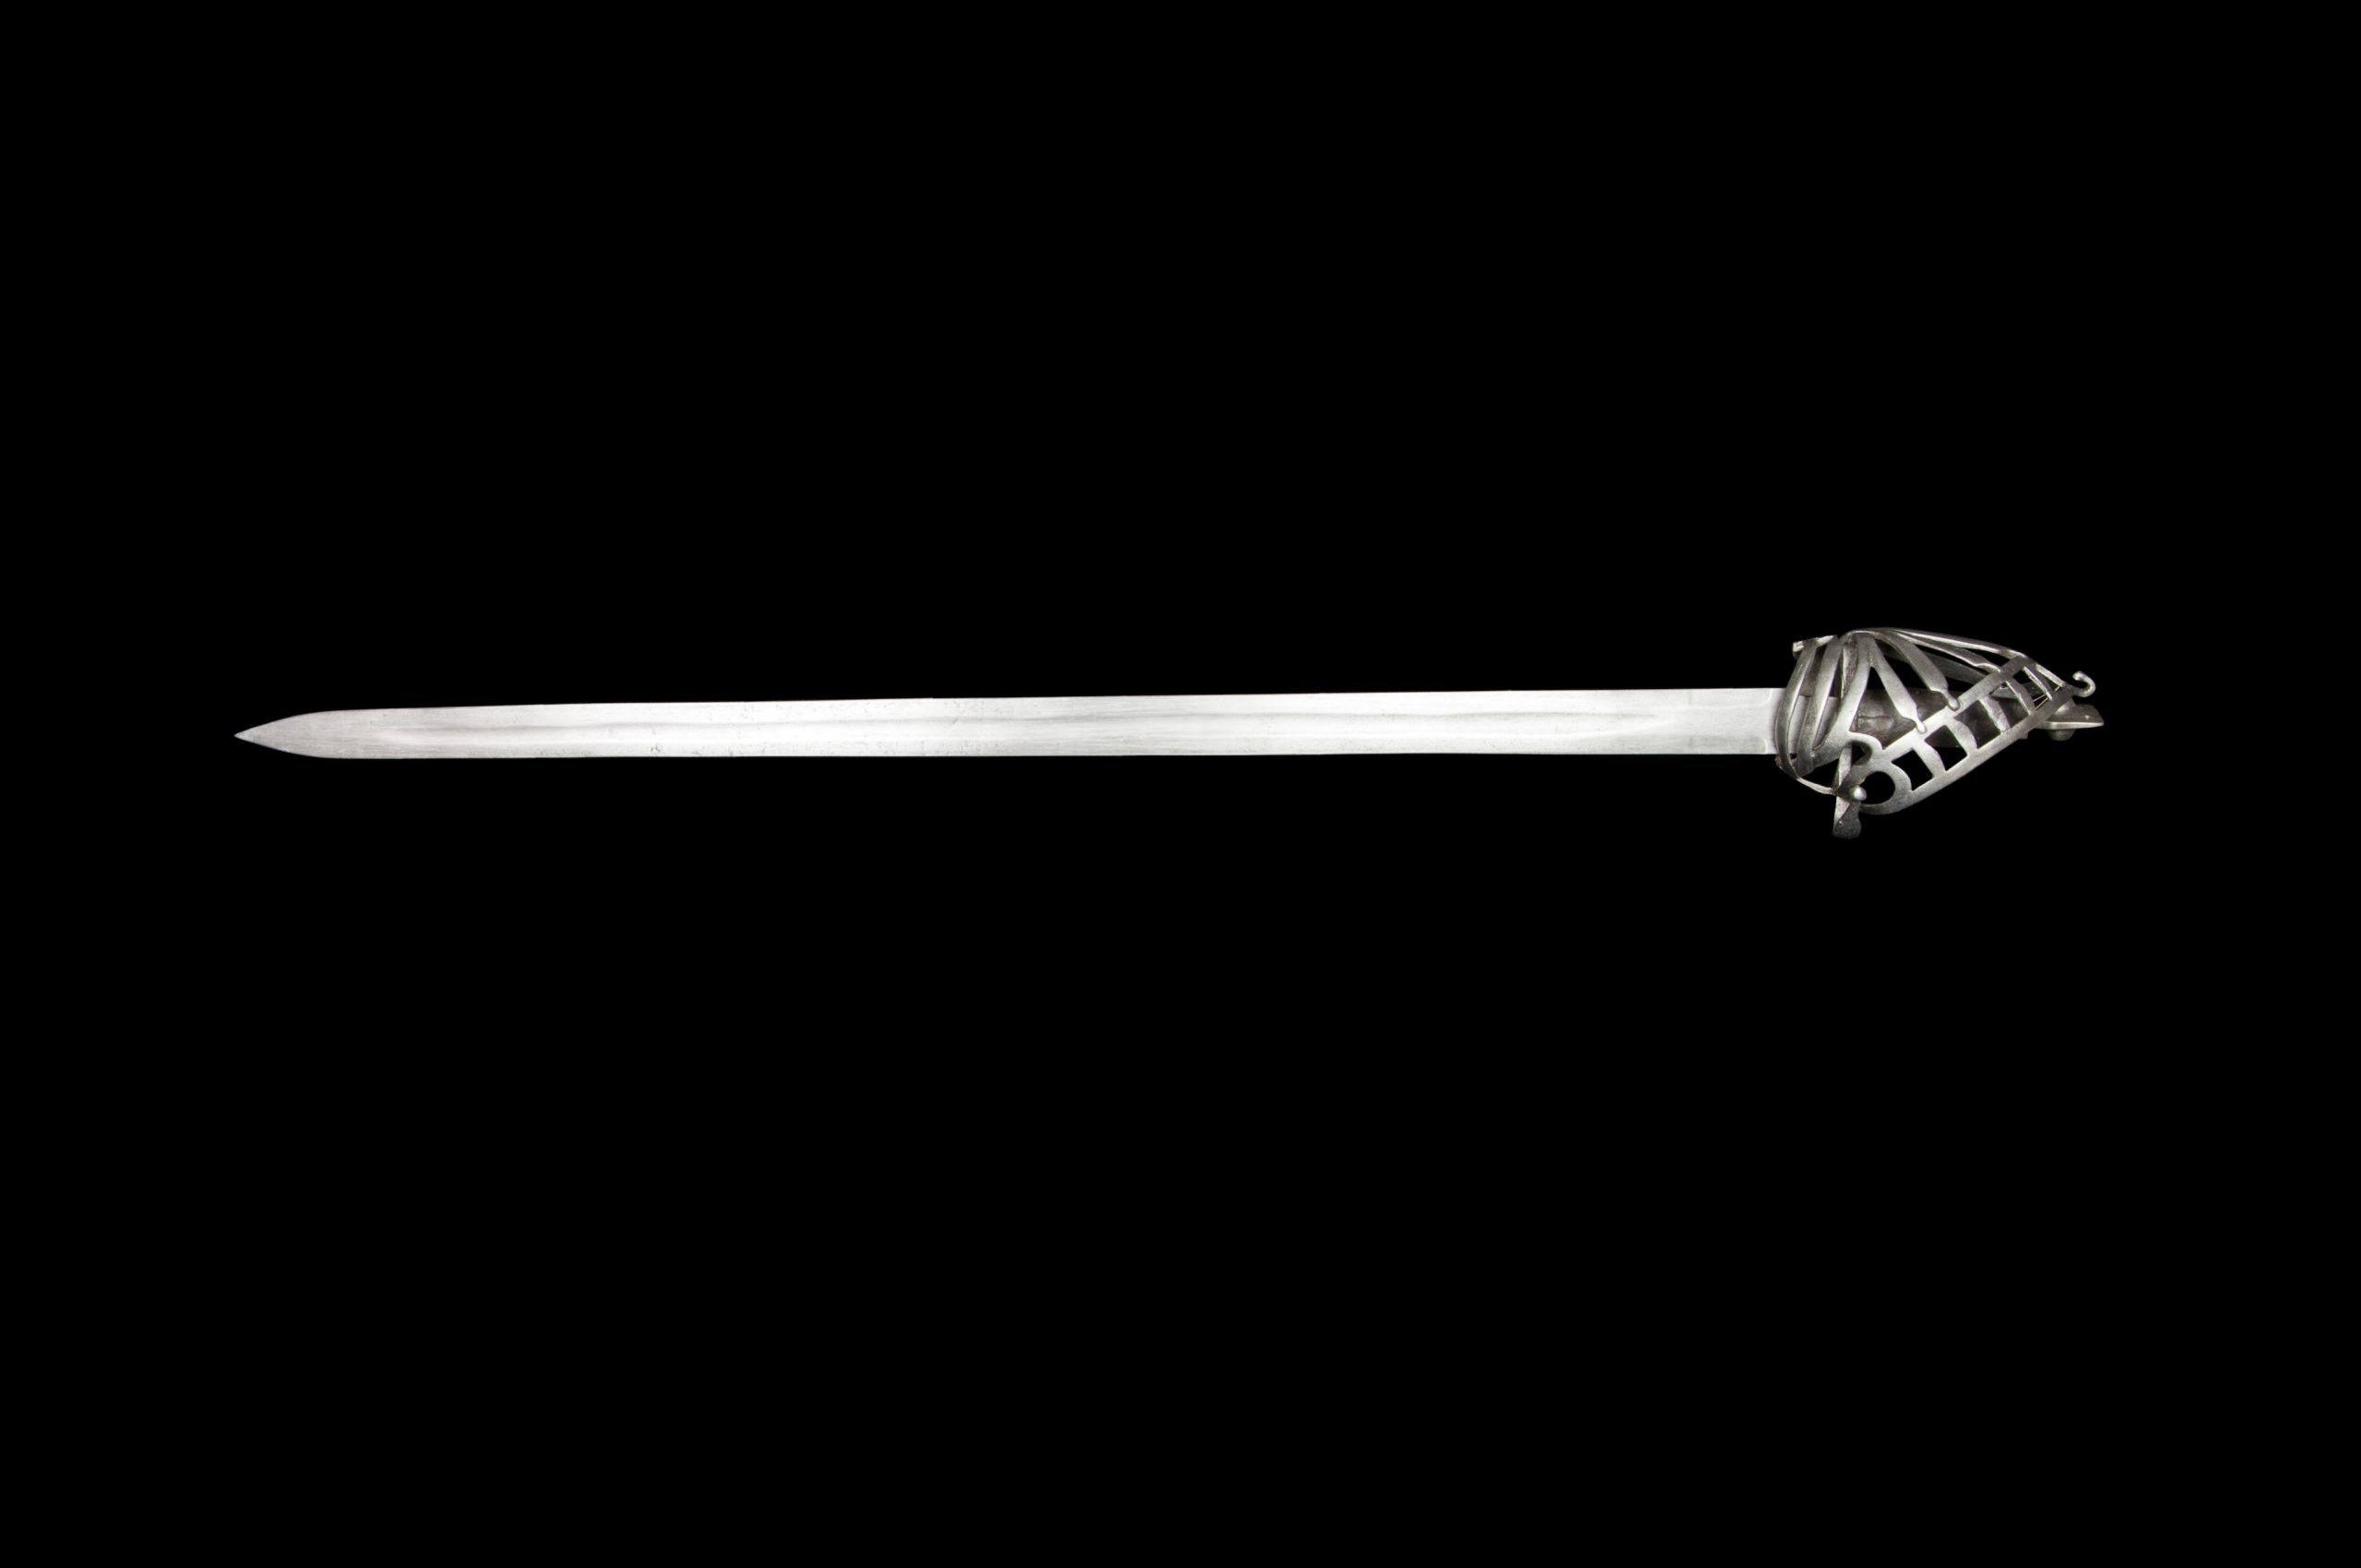 Objeto museológico (espada)